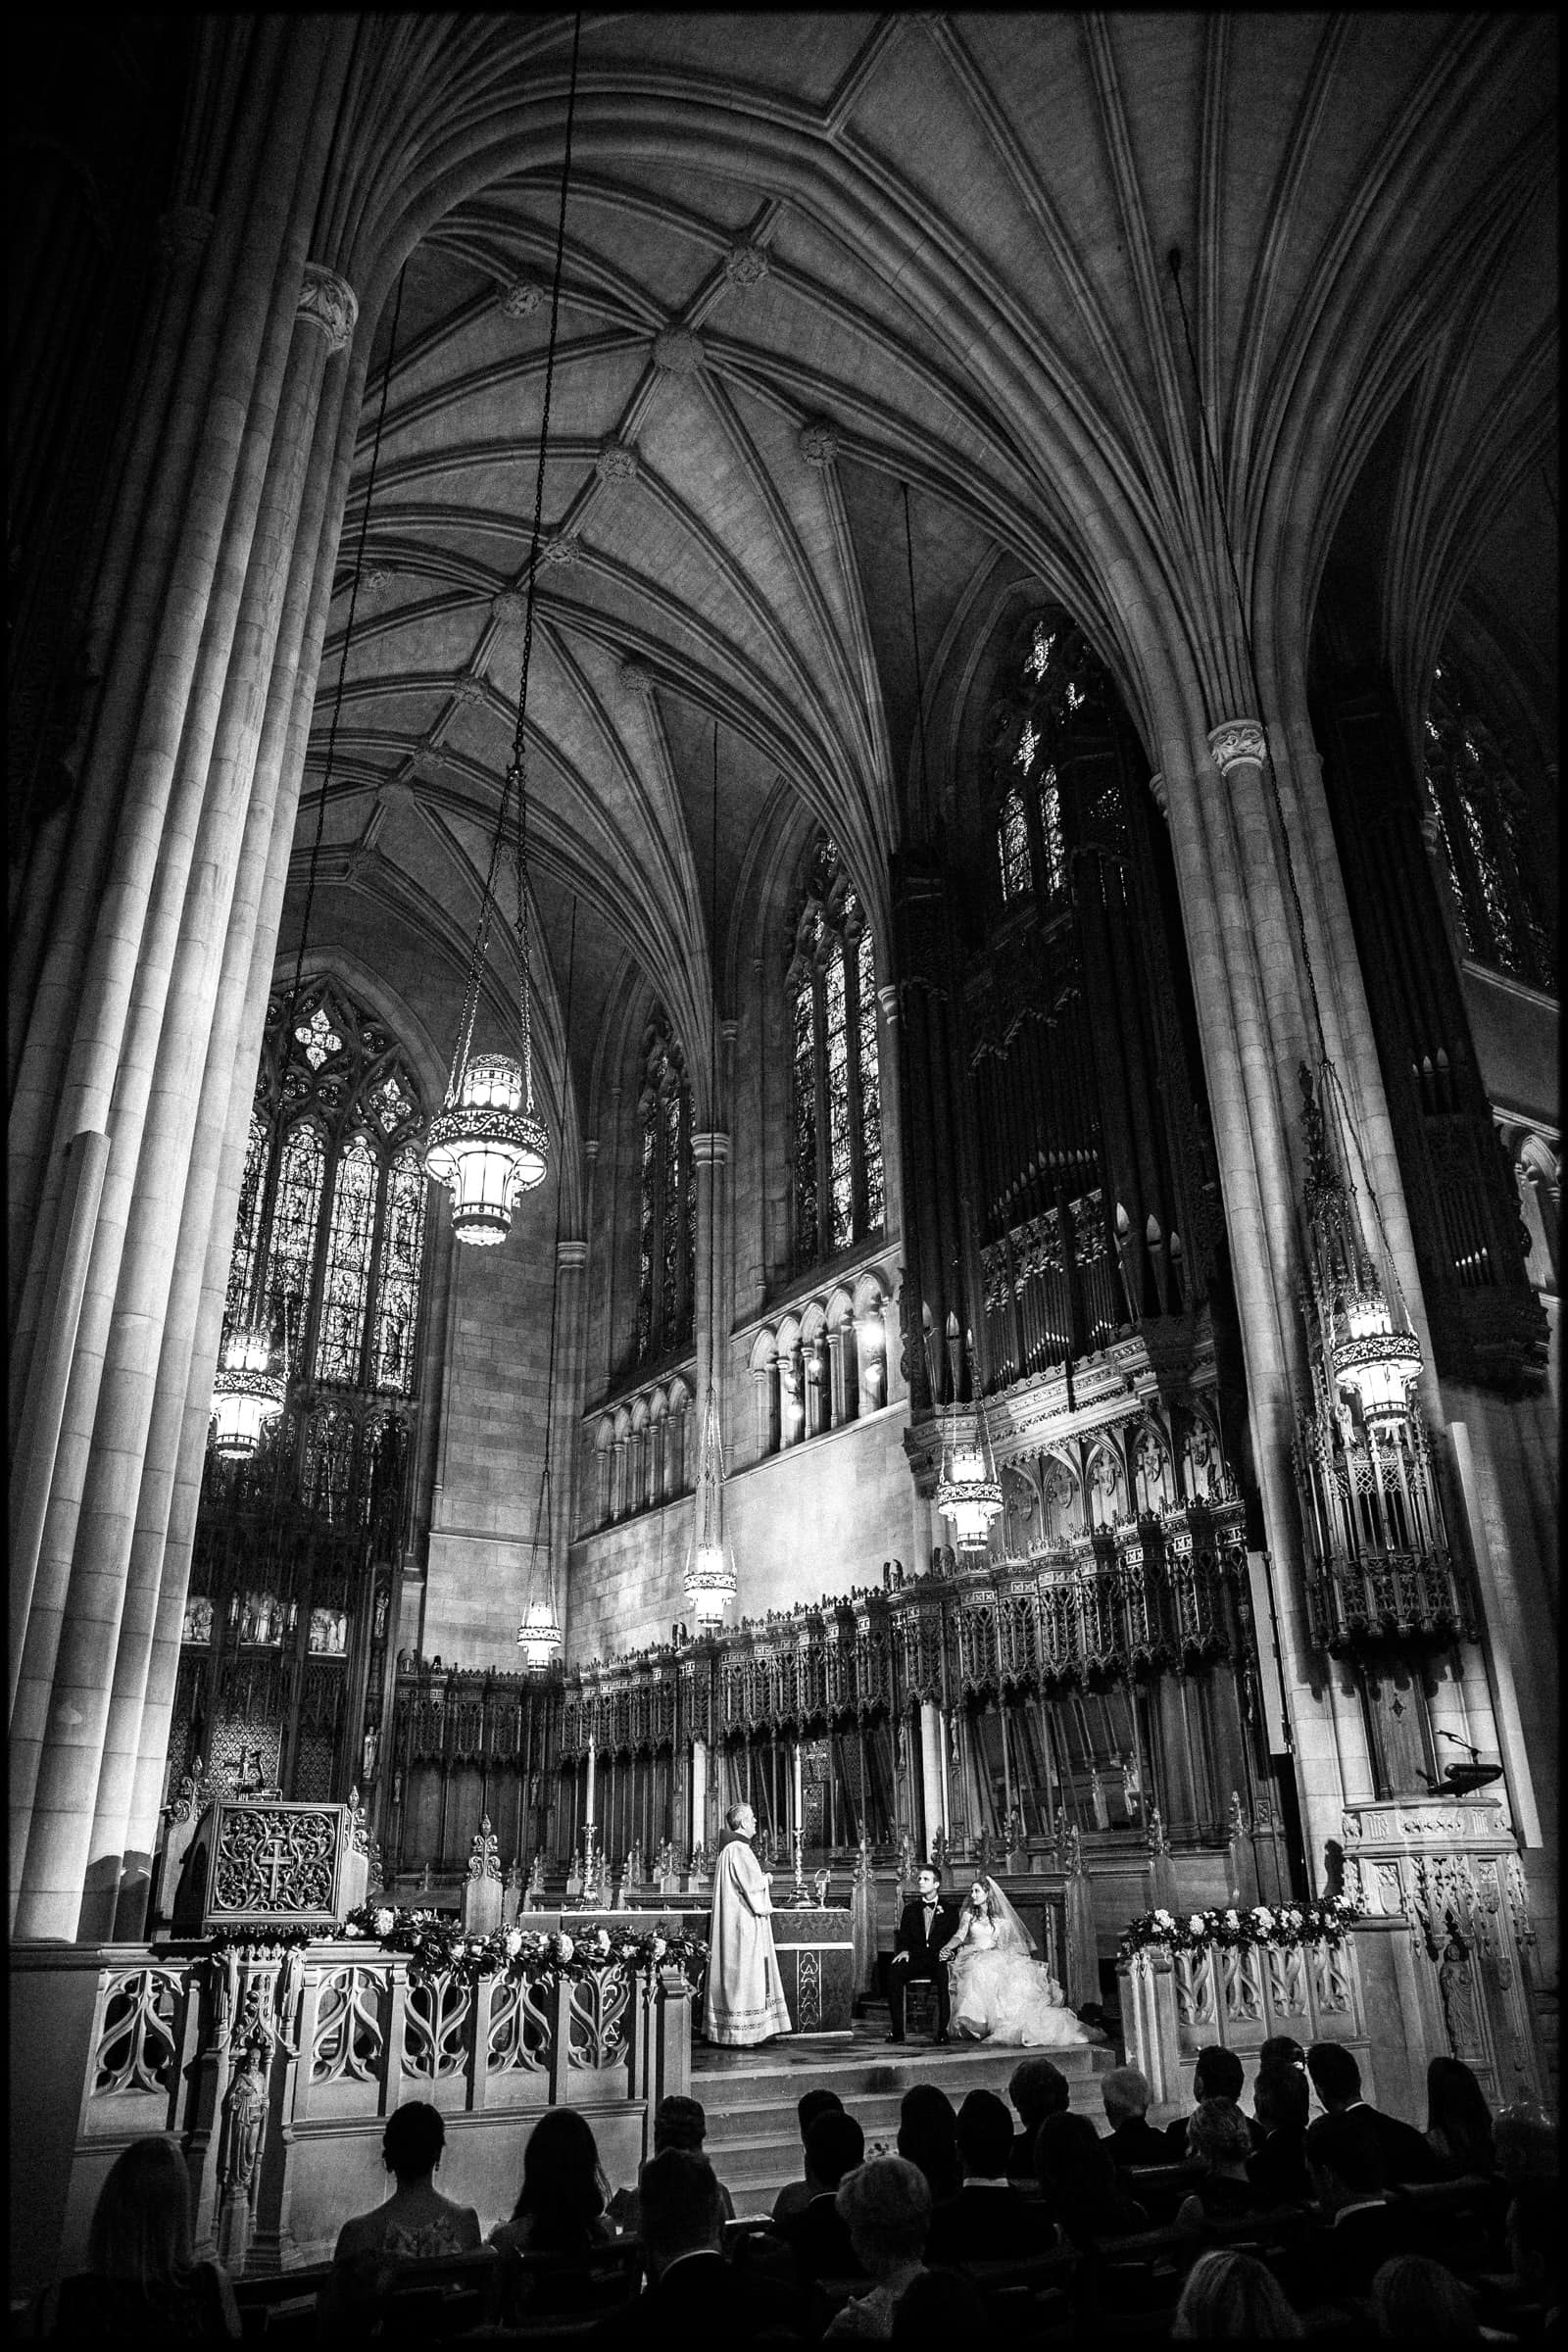 B&W Duke University Chapel Wedding Ceremony Photo by Joe Payne showcasing Duke Chapel's amazing gothic architecture. 